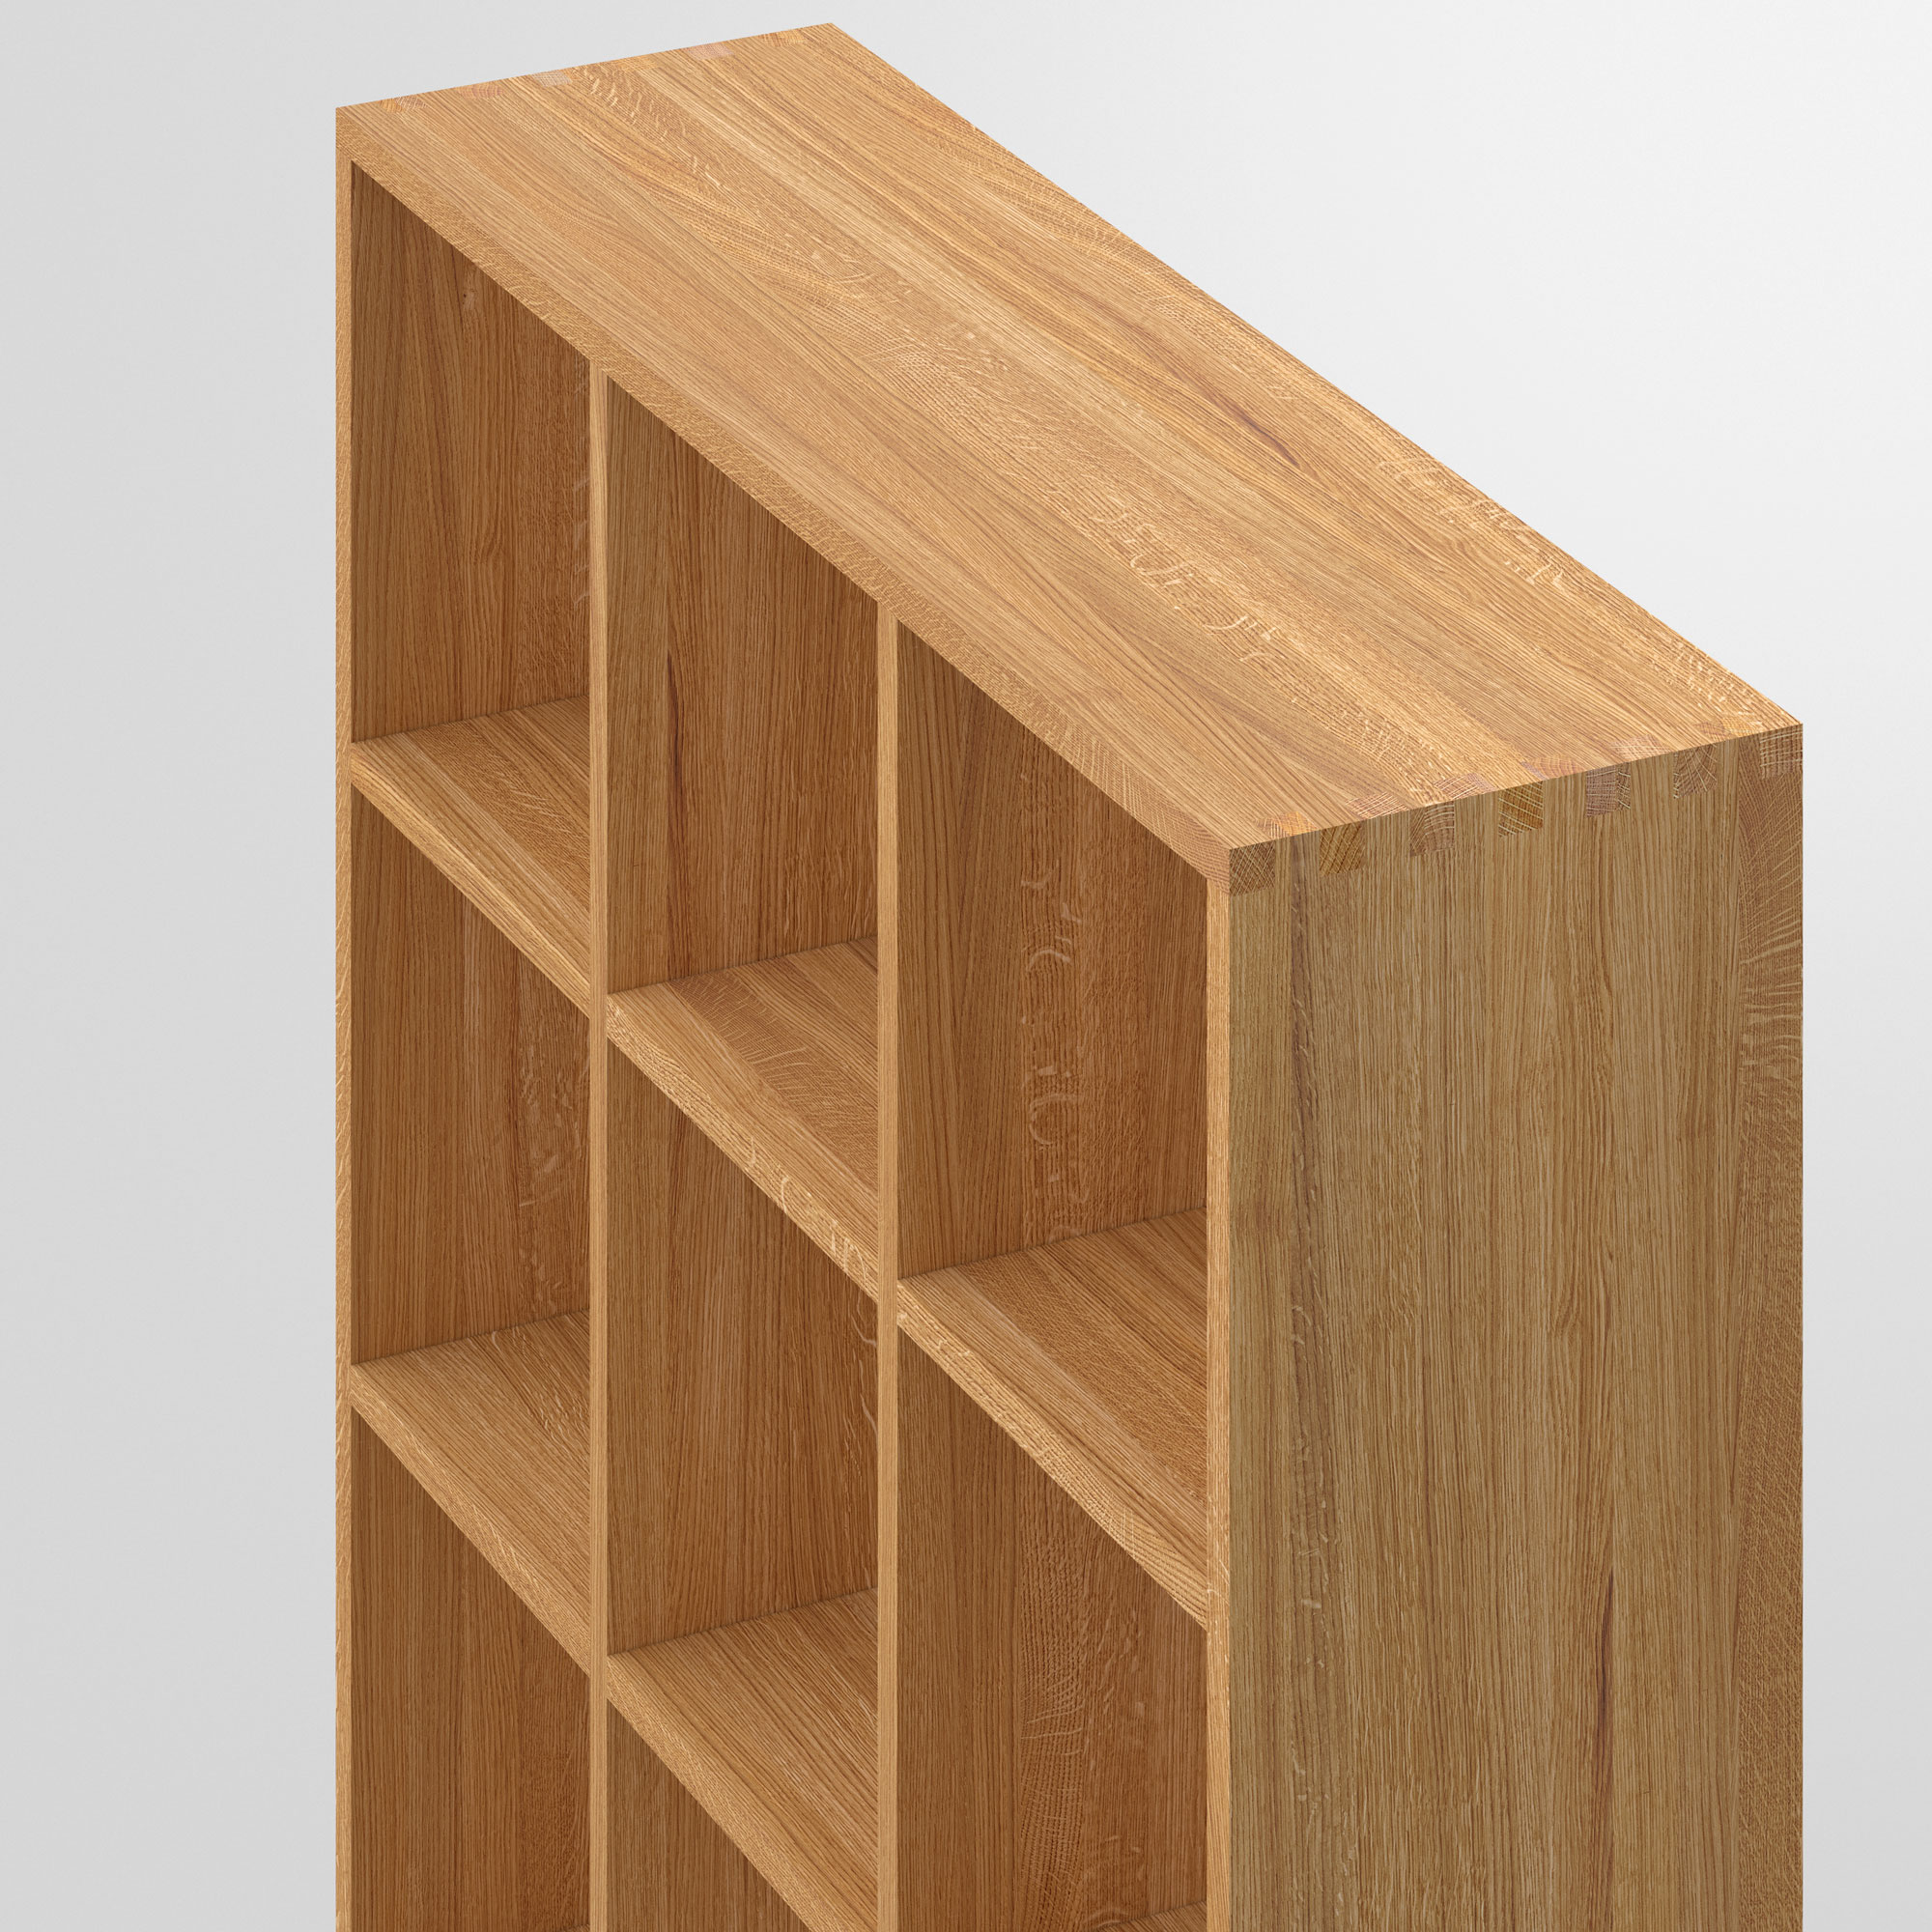 Designer Wood Shelf PISA G cam2 custom made in solid wood by vitamin design